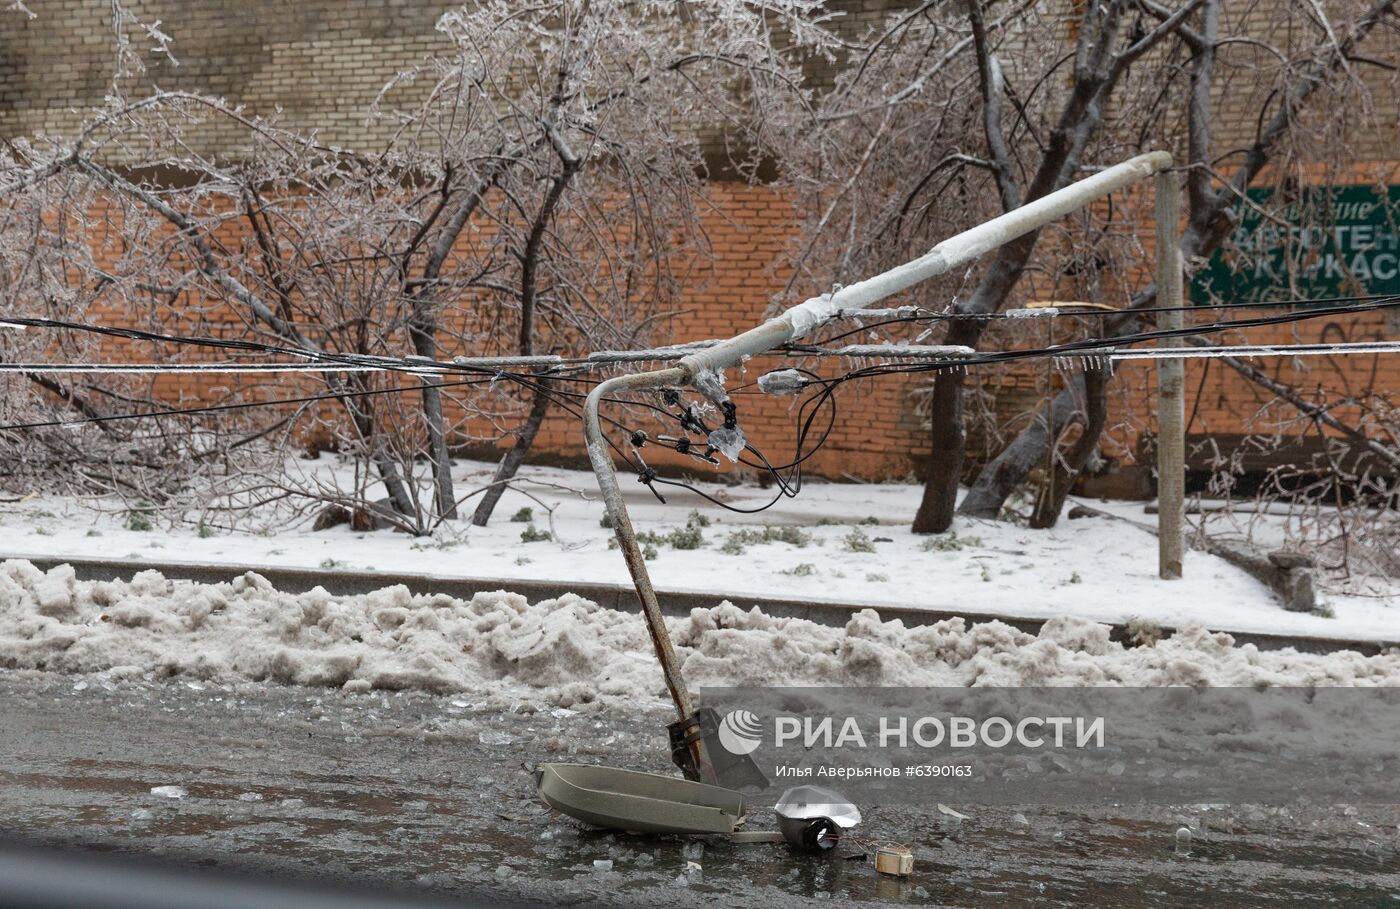 Последствия ледяного дождя во Владивостоке